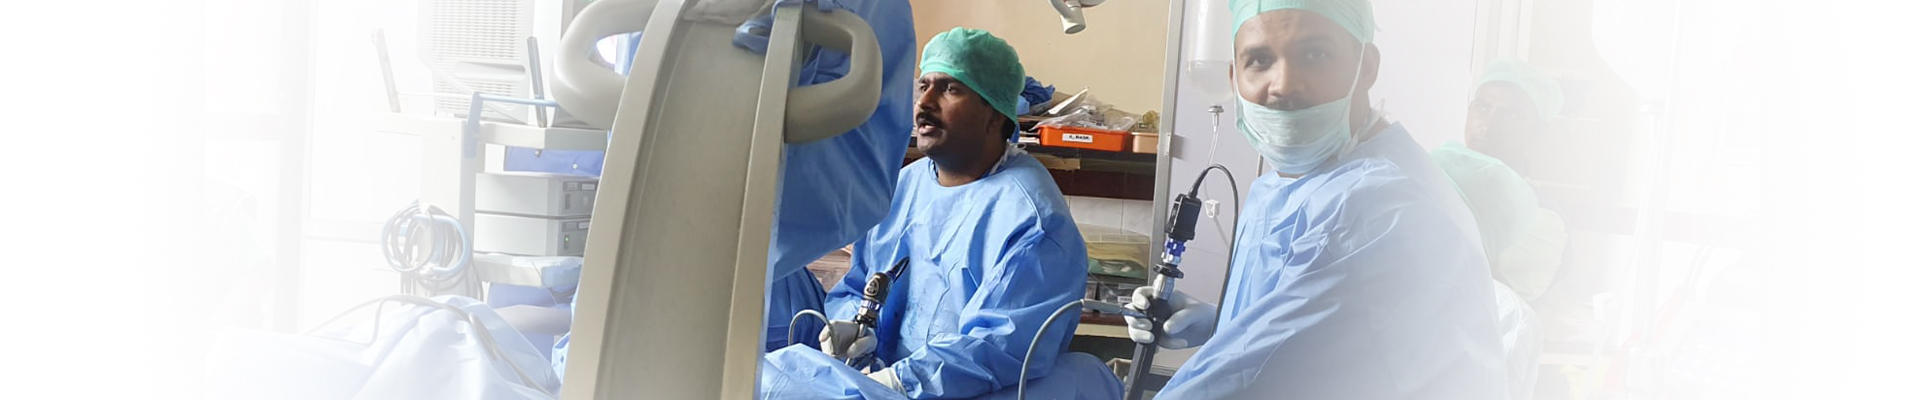 Robotic Kidney Surgery in Chennai | Chennai Kidney Care